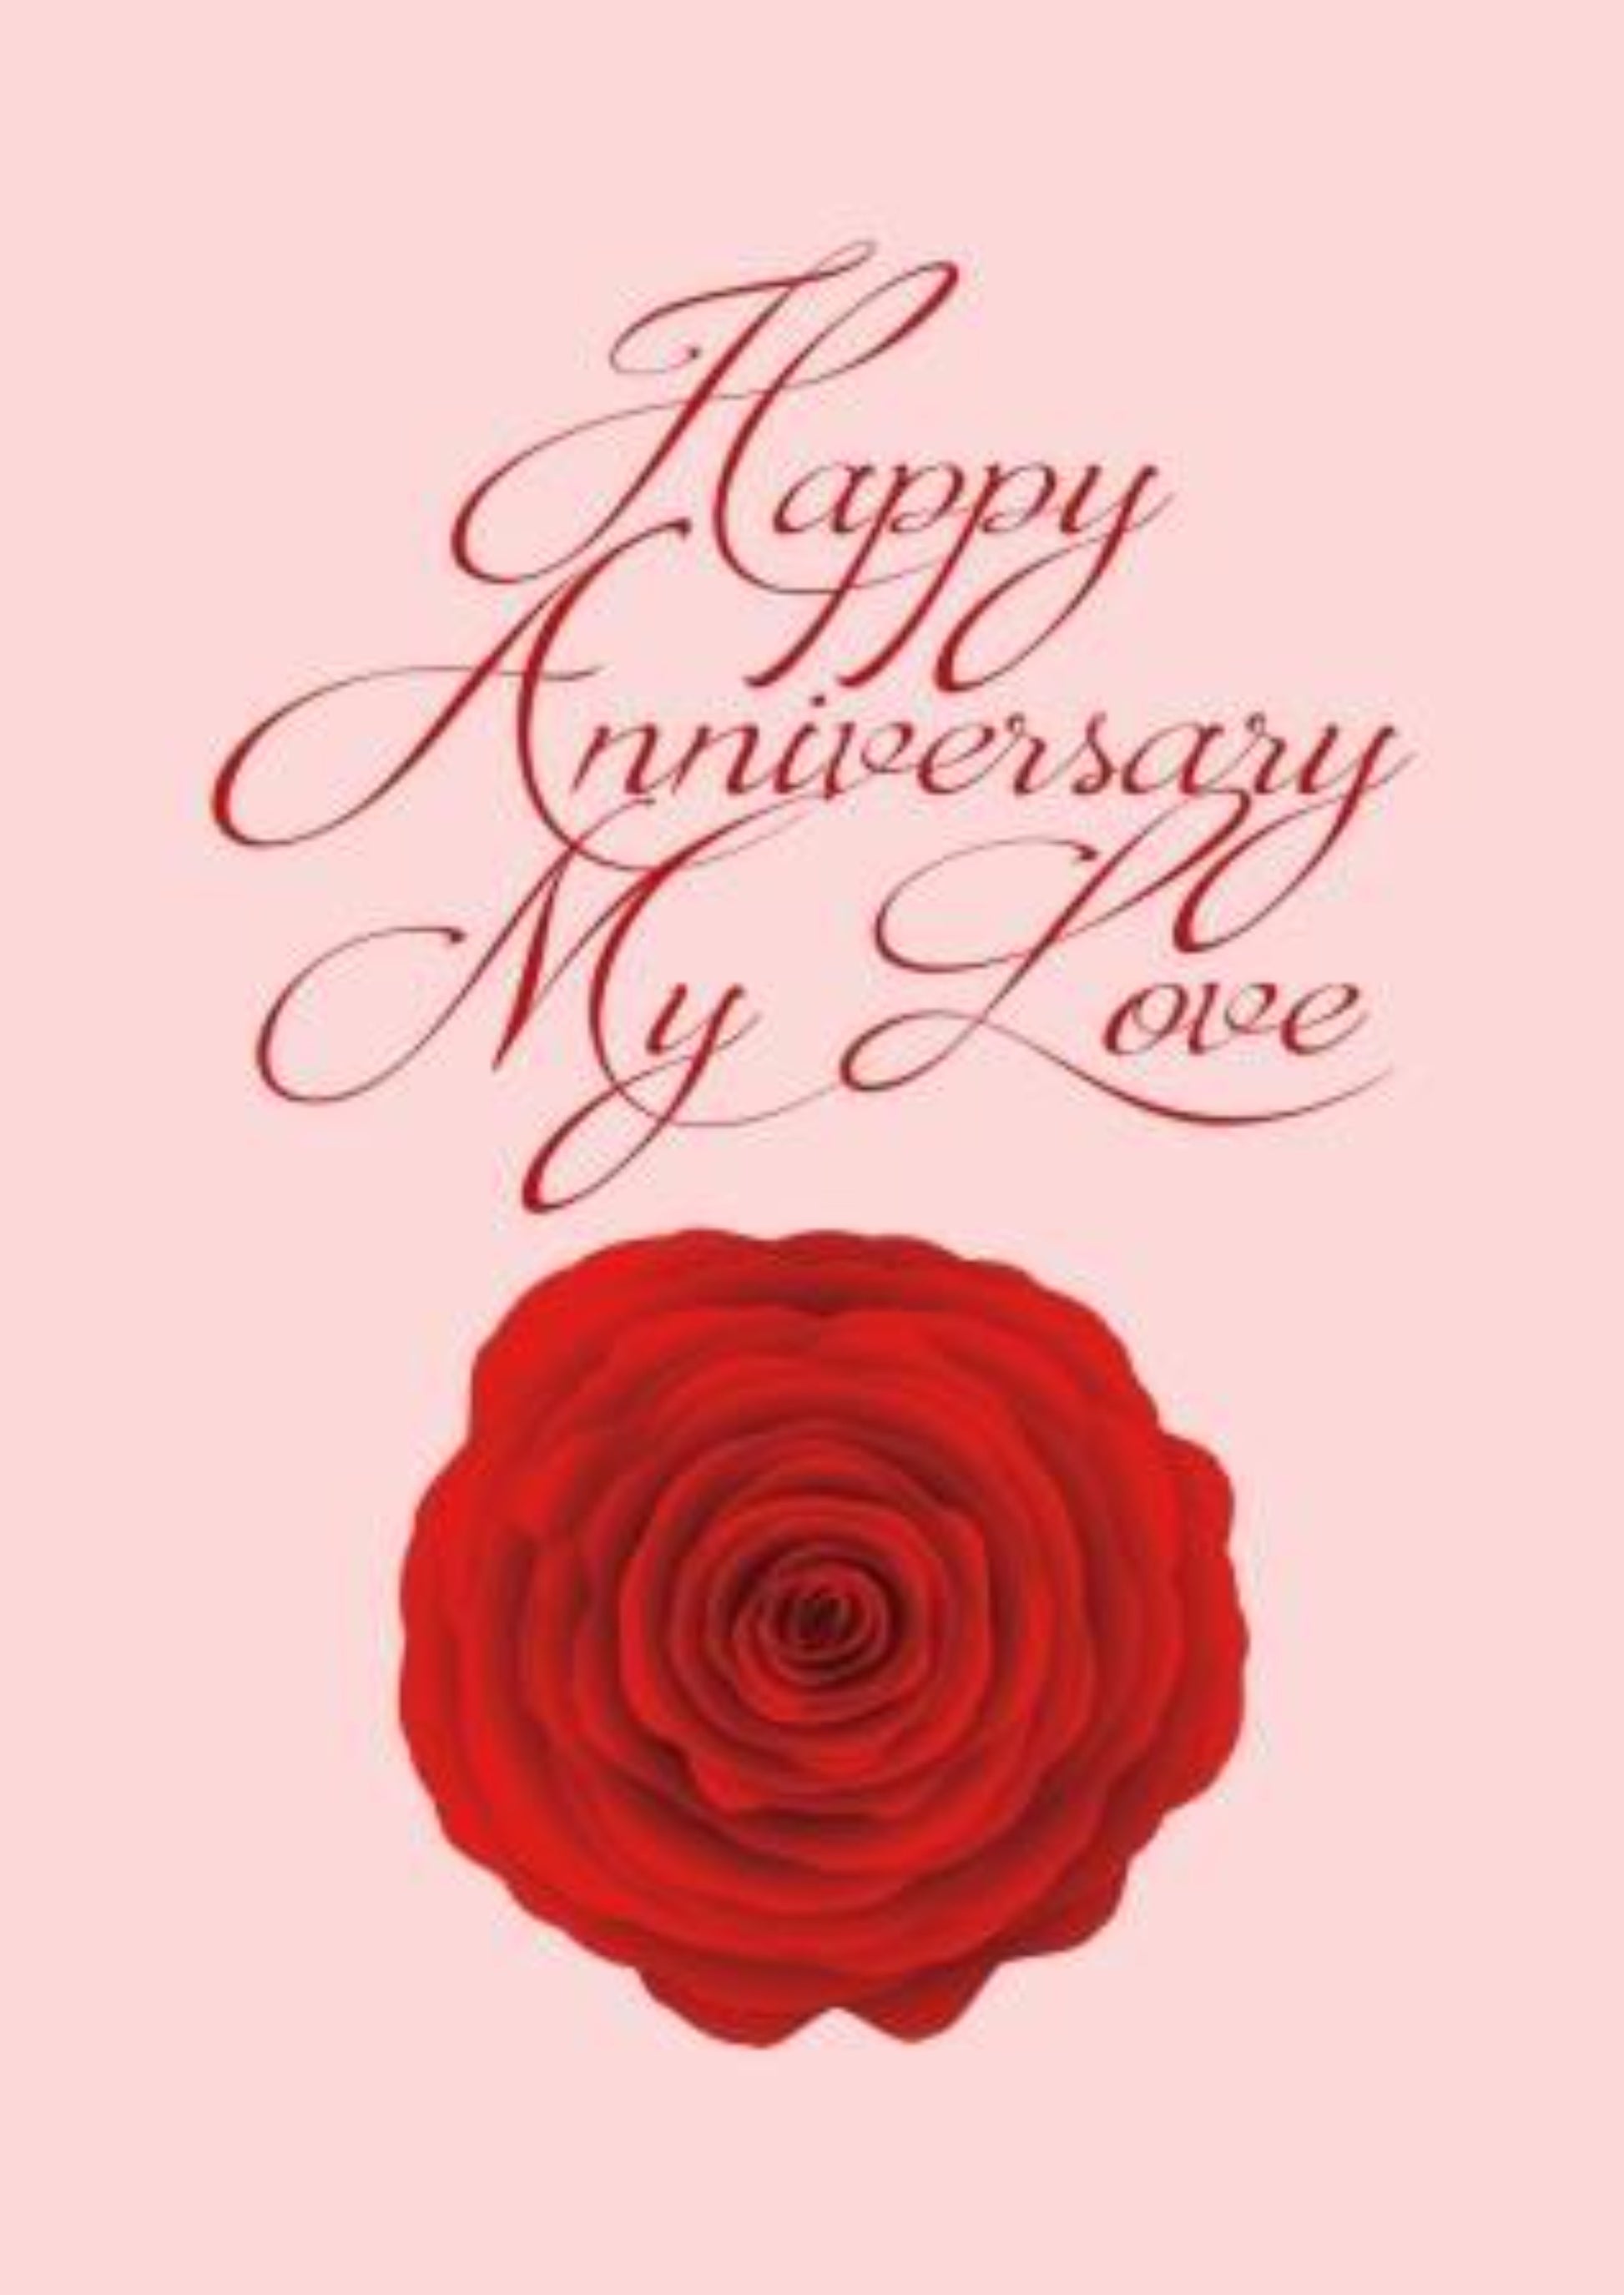 Happy Anniversary My Love - Rose Anniversary Greeting Card.